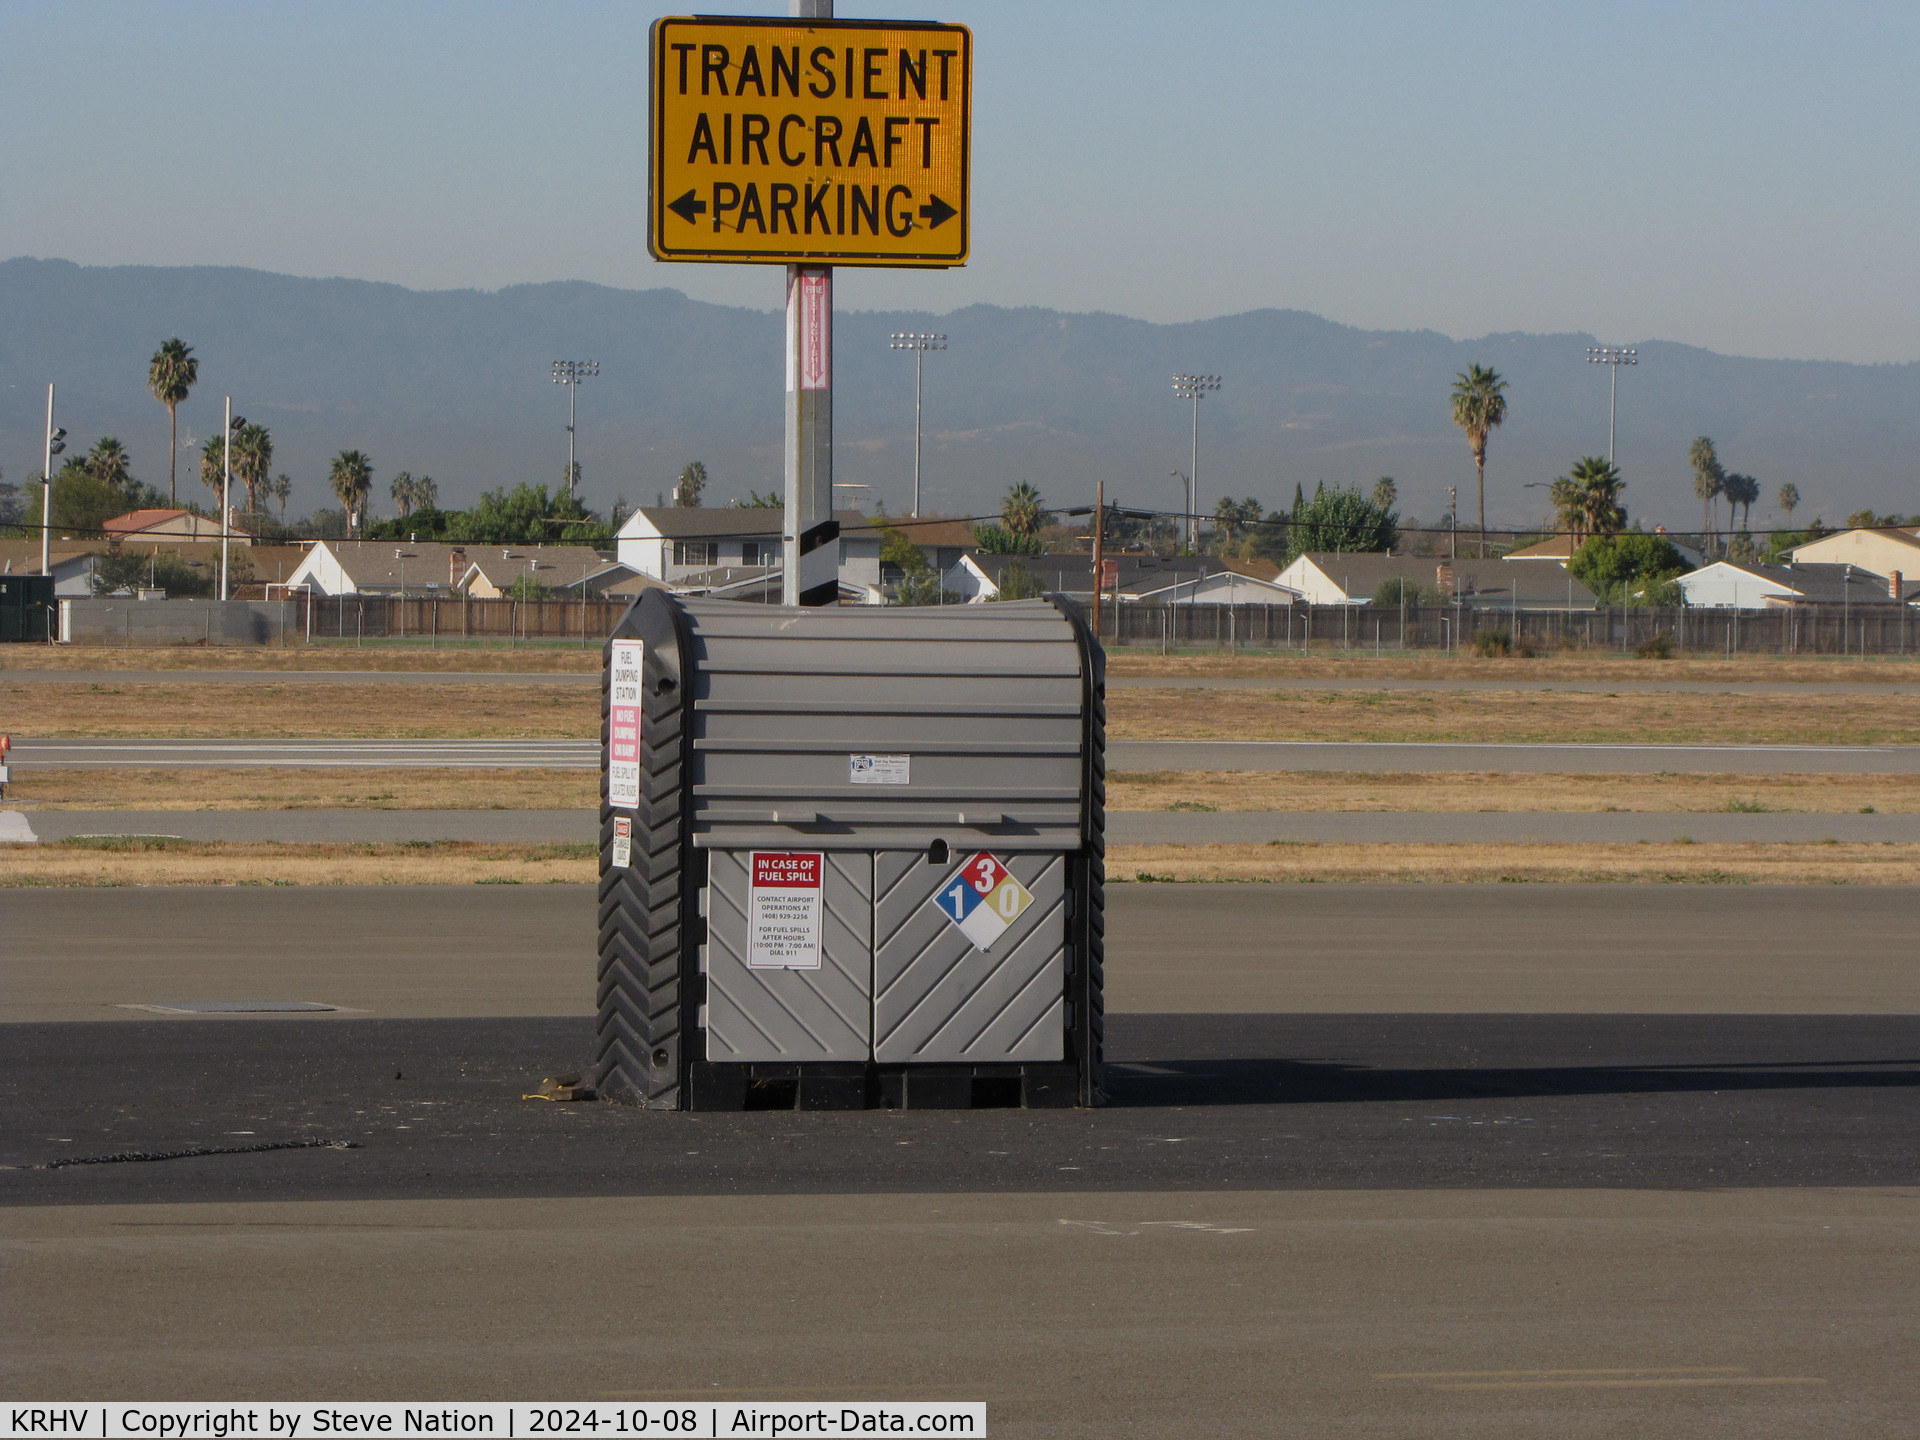 Reid-hillview Of Santa Clara County Airport (RHV) - Transient Aircraft Parking sign @ Reid-Hillview Airport, San Jose, CA